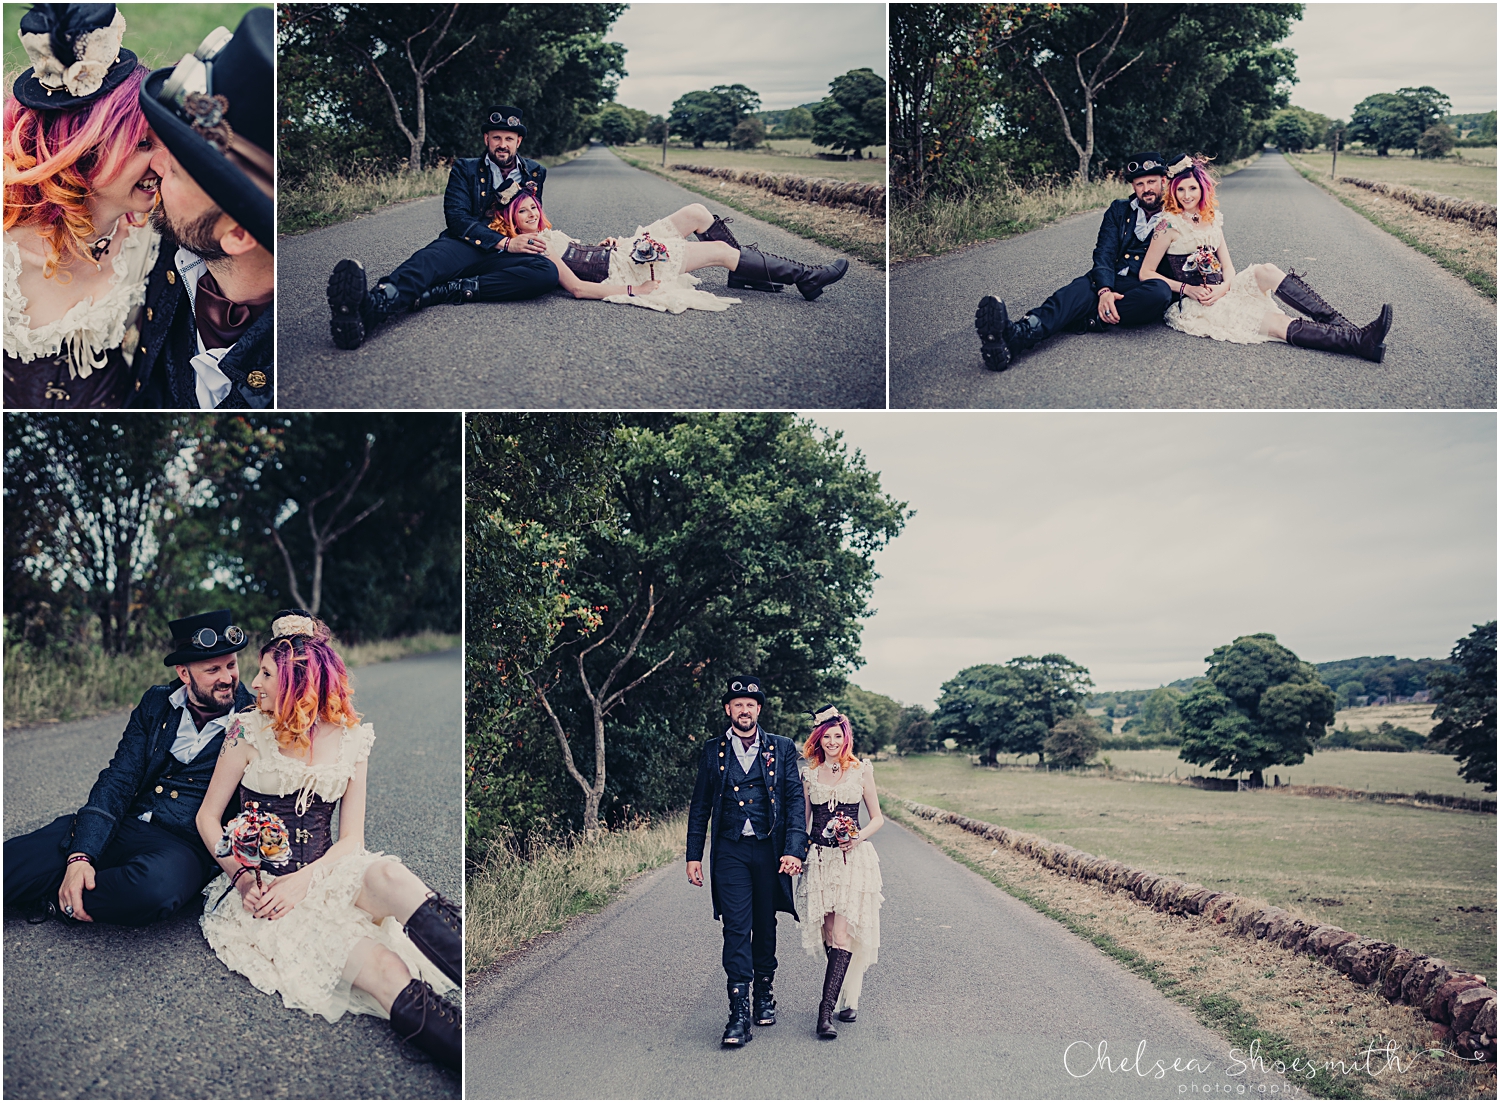 April & Rien Wedding - Chelsea Shoesmith Photoraphy00341